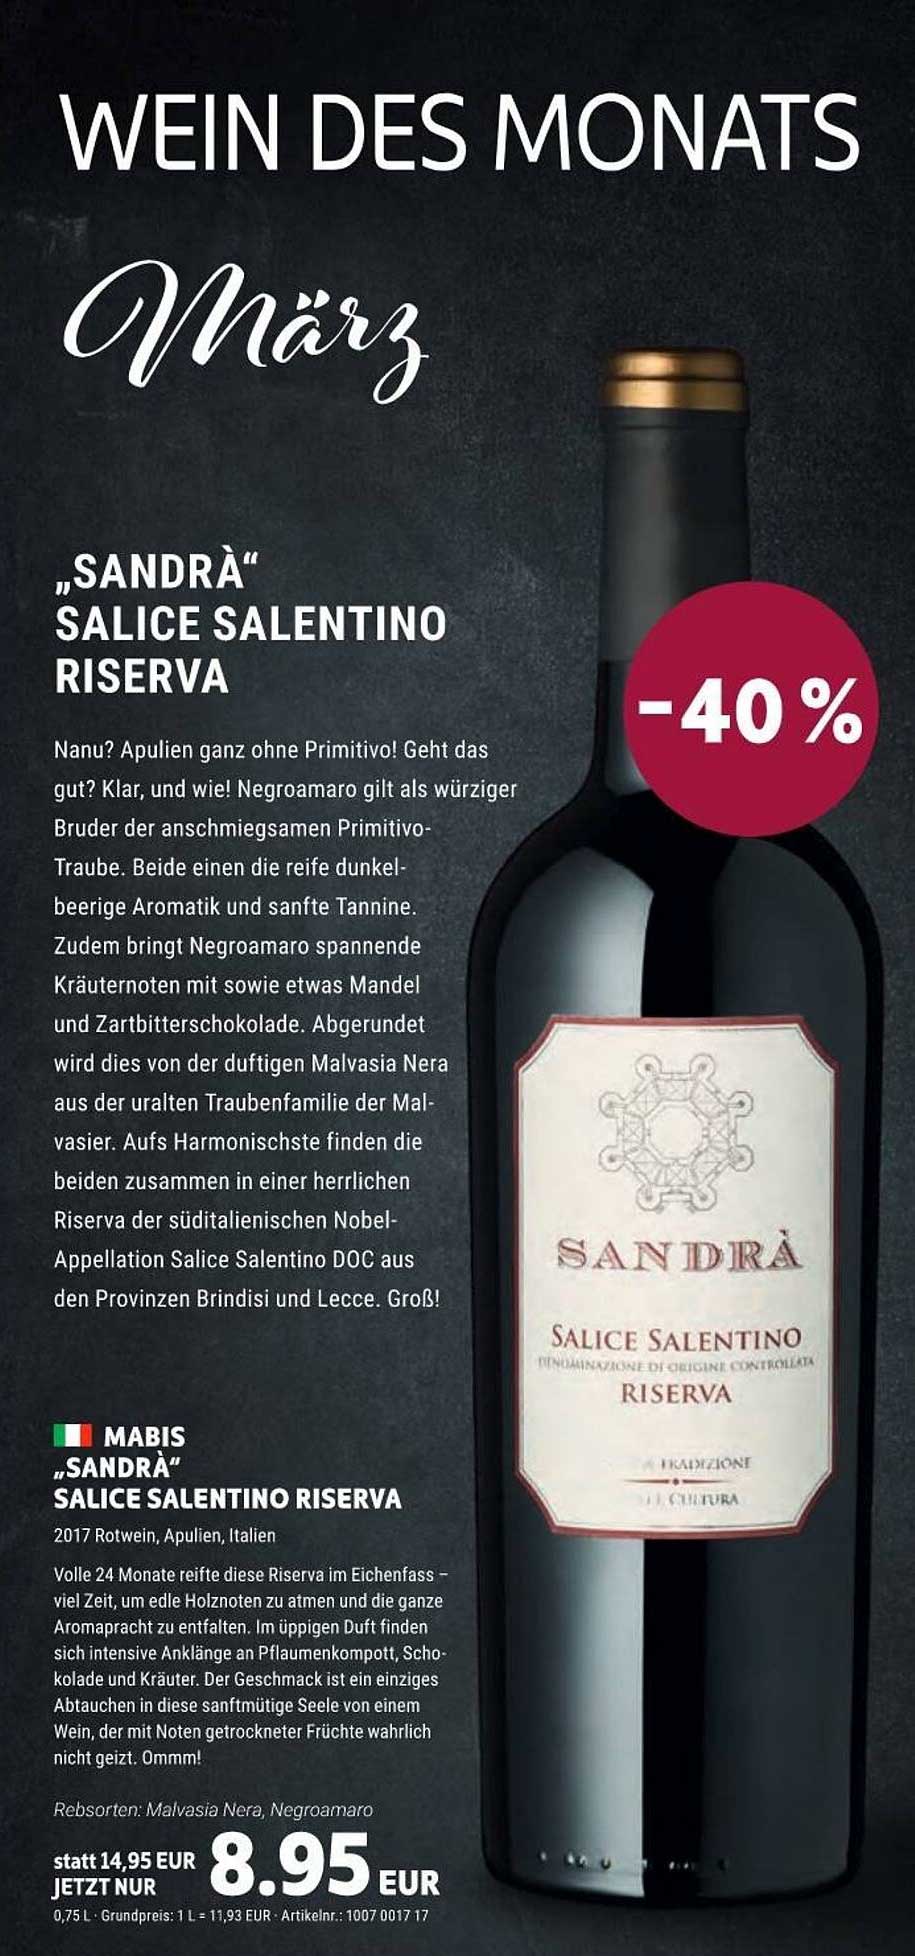 Vino Weinmarkt Mabis „sandrà“ Salice Salentino Riserva